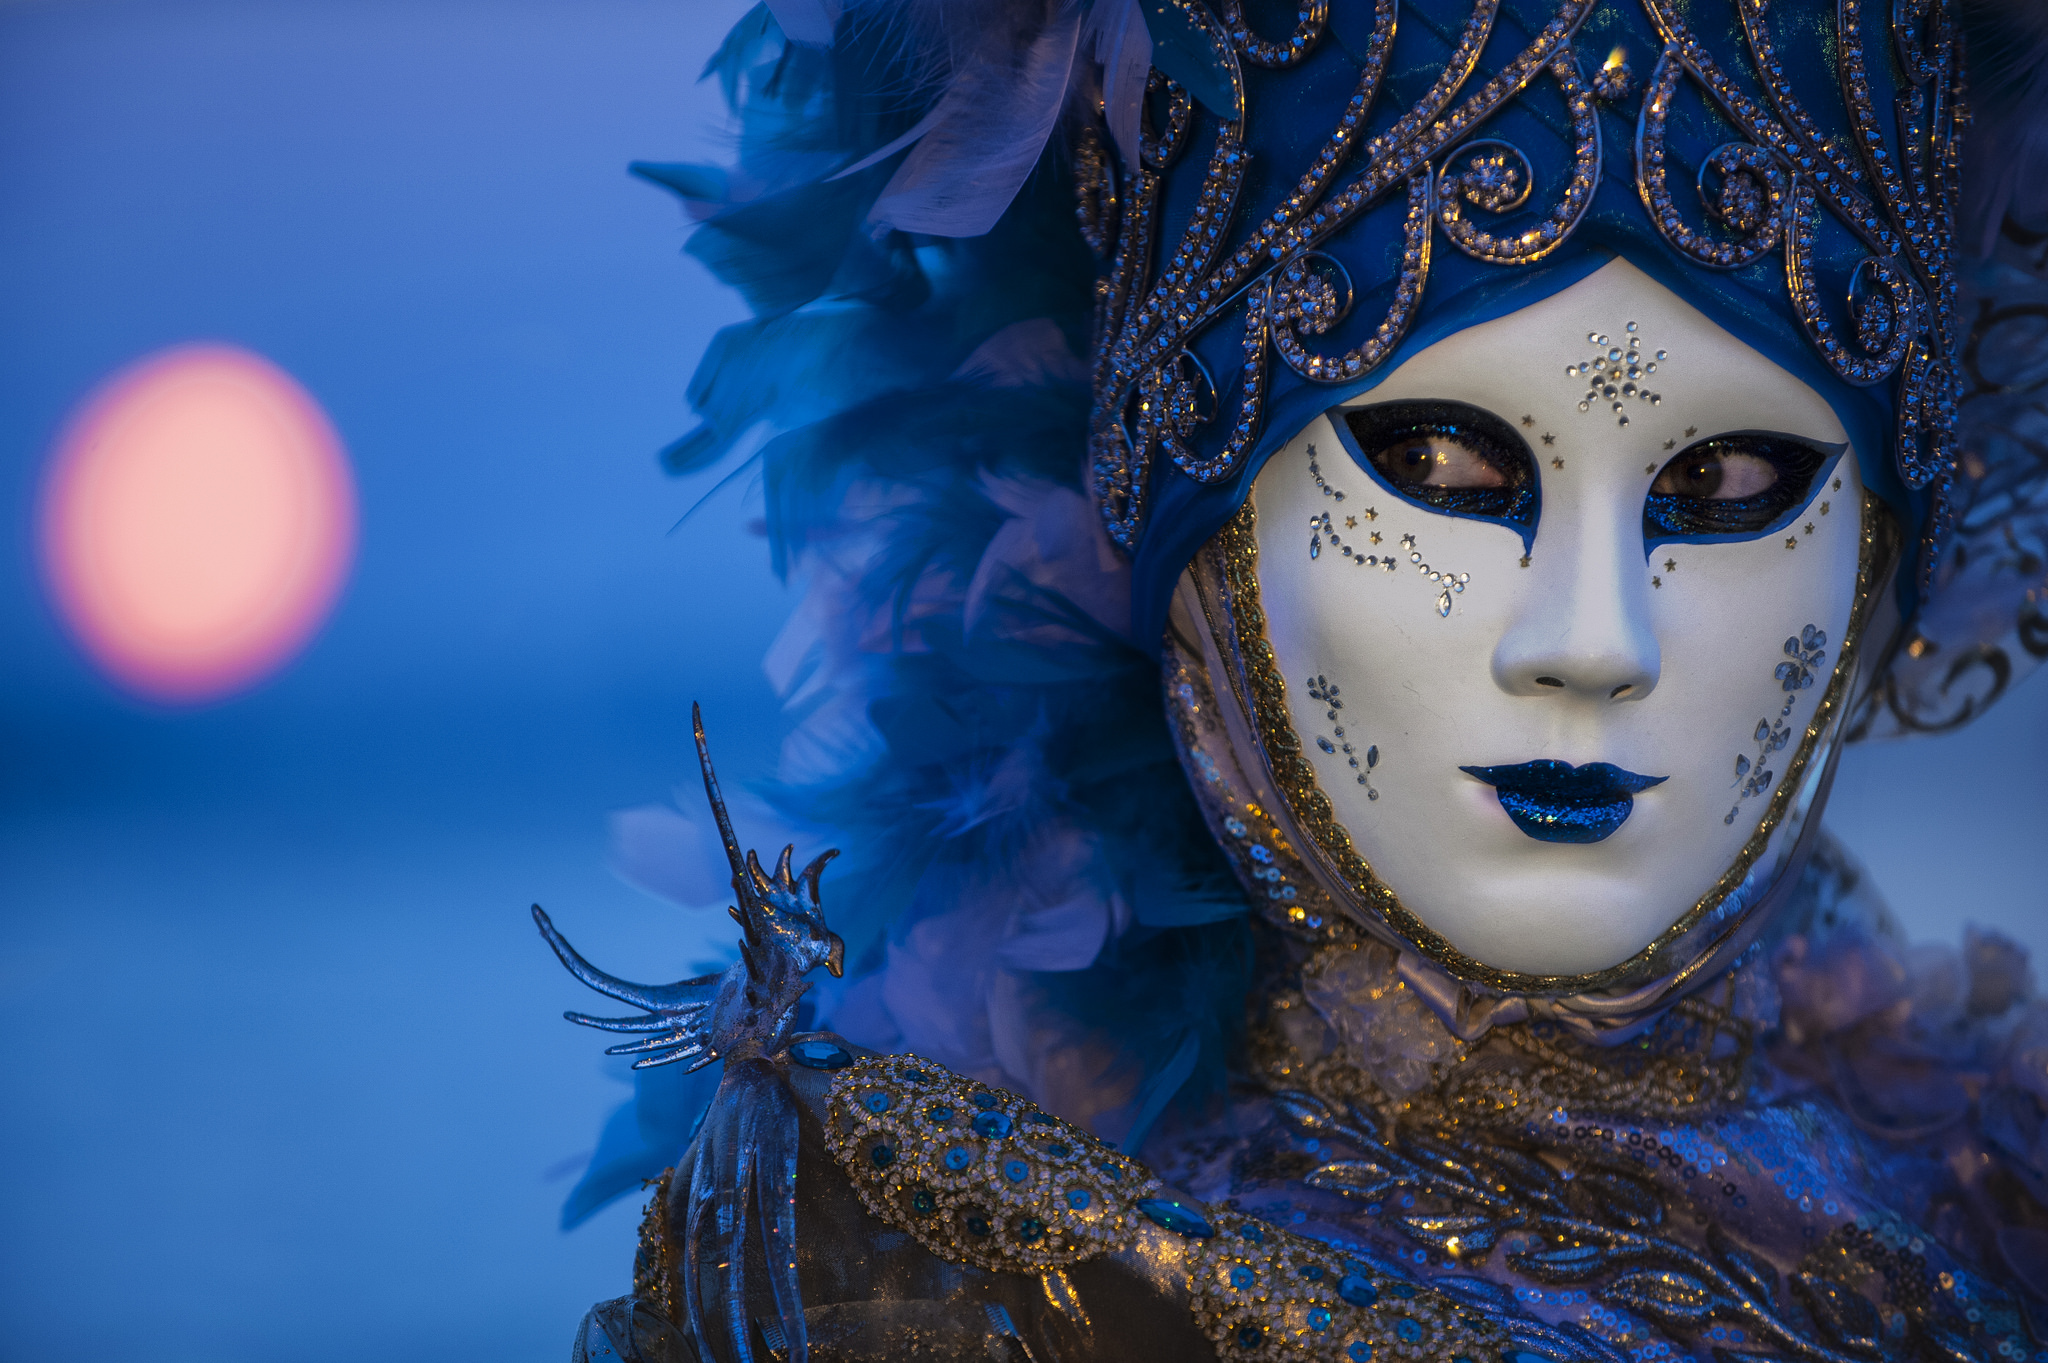 Wallpapers carnival in venice costumes Venetian costume on the desktop